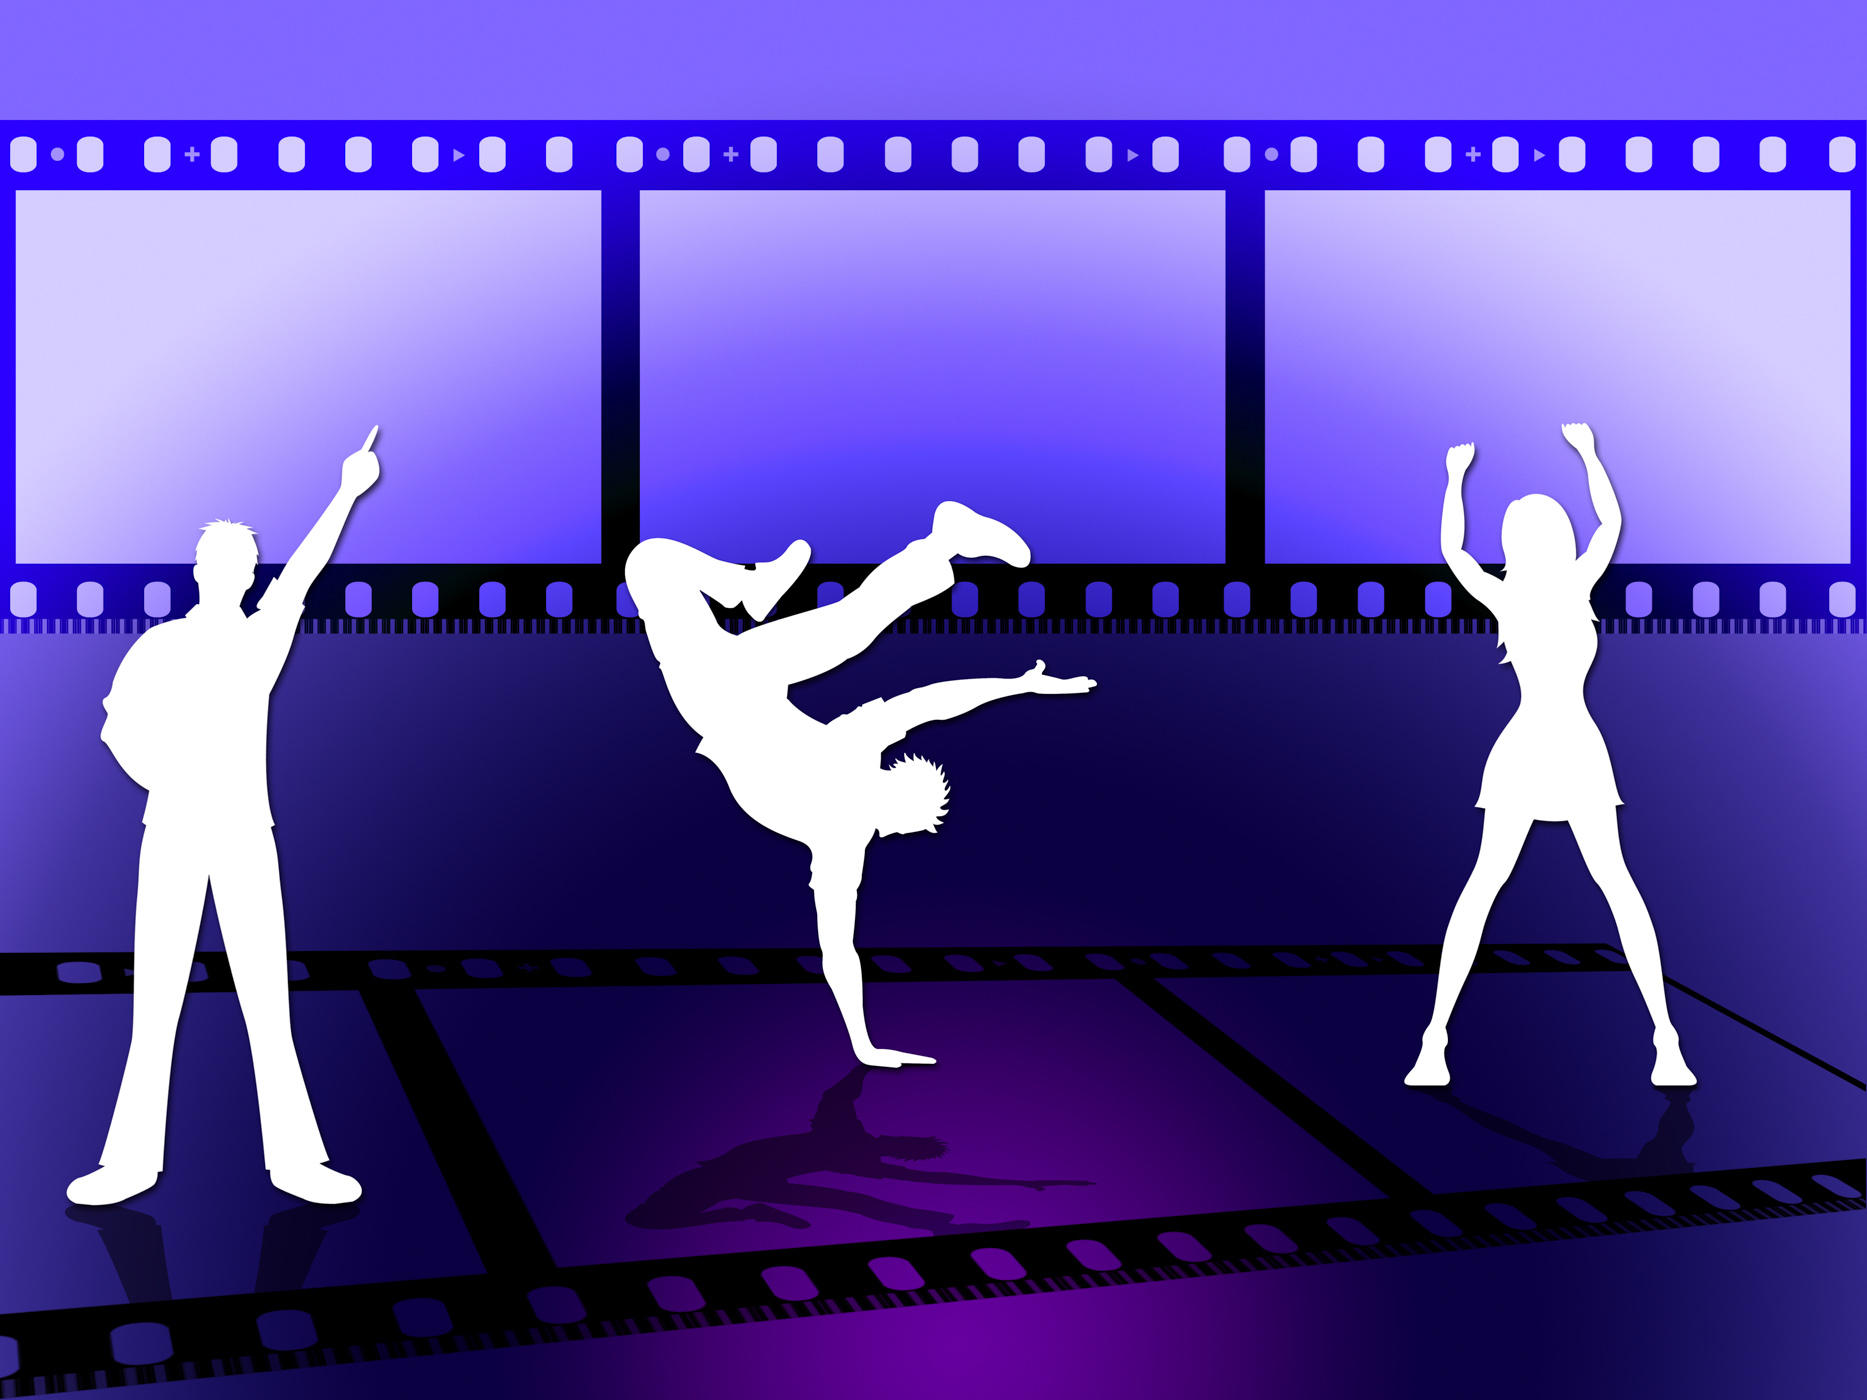 Filmstrip dancing indicates disco music and border photo